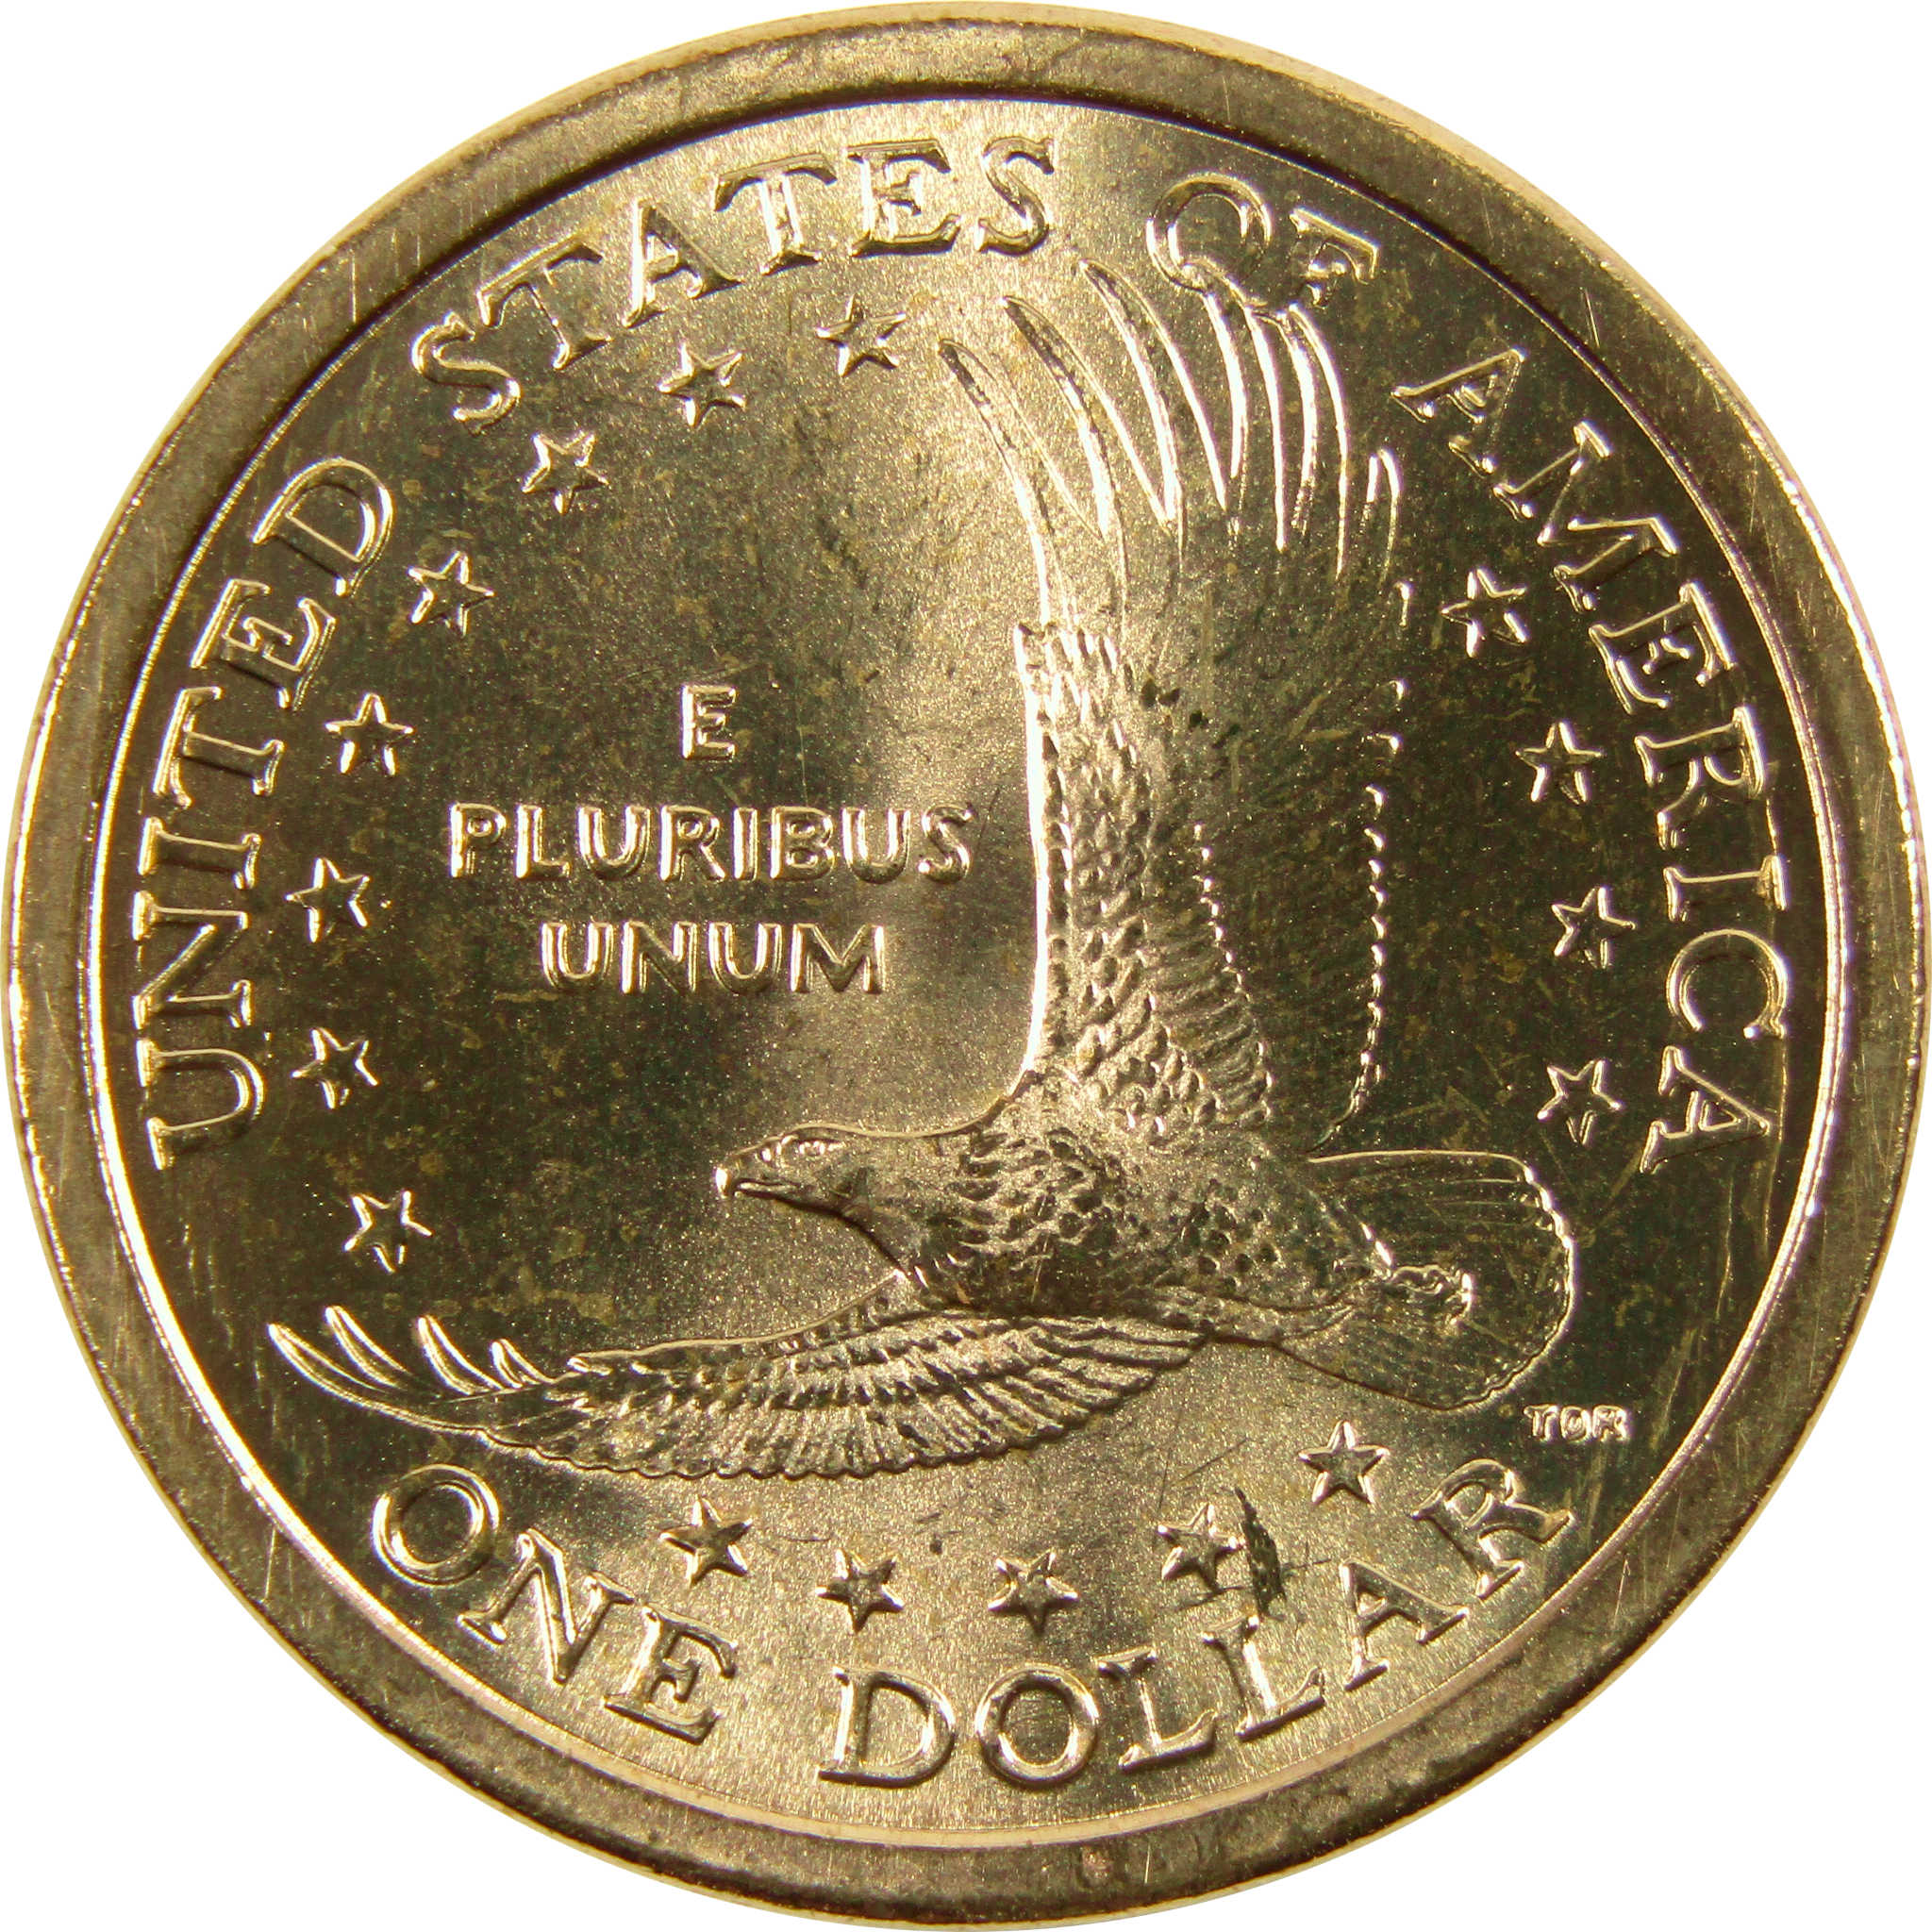 2002 D Sacagawea Native American Dollar BU Uncirculated $1 Coin